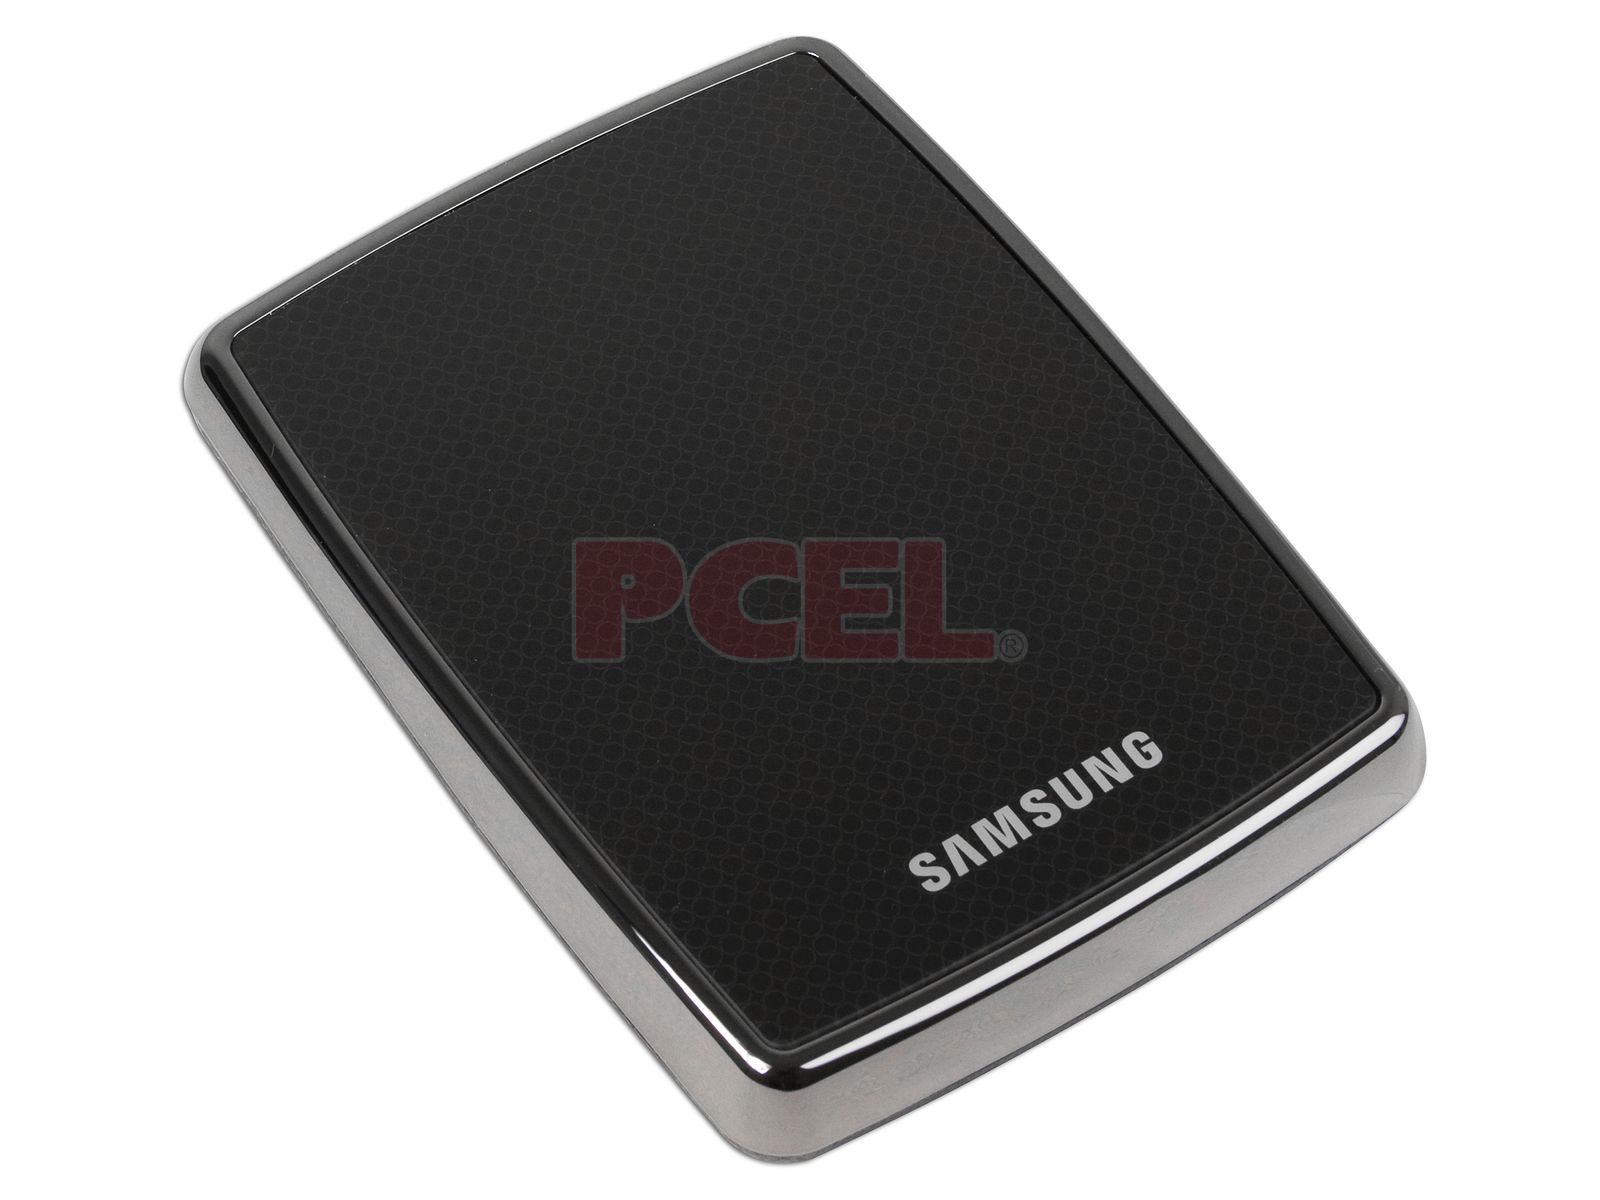 Portable Samsung de 160GB, USB 2.0. Color Negro